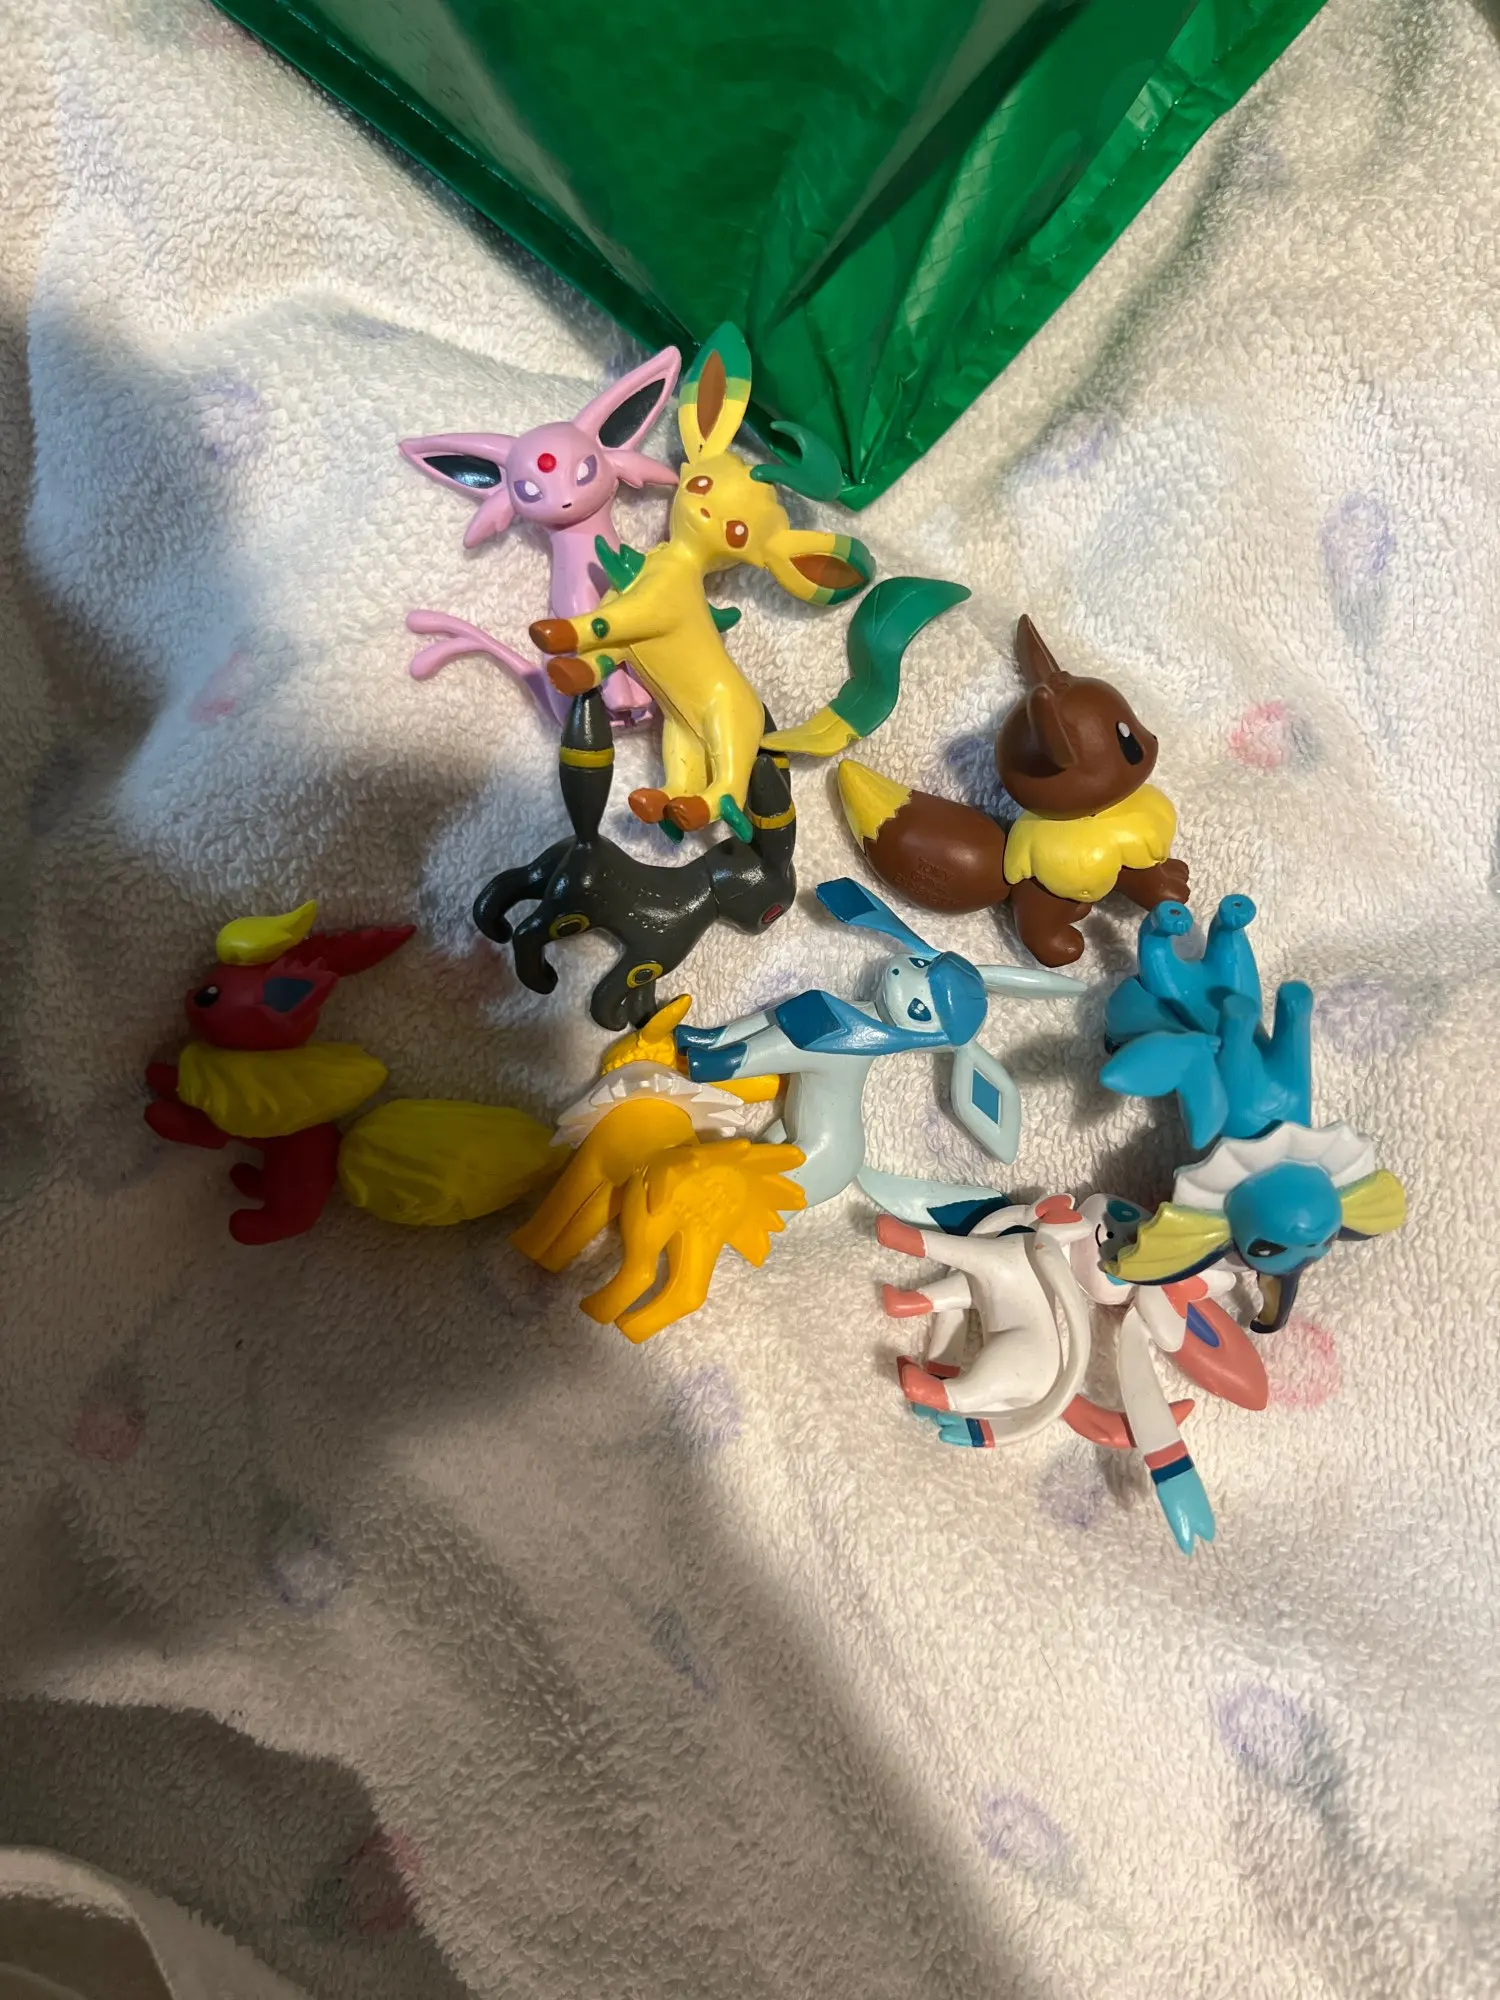 Takara Tomy Vaporeon Jolteon Flareon Espeon Umbreon Leafeon Glaceon Eeveelution Anime Pokemon Eevee Figure Doll Toy Gift for Kid photo review